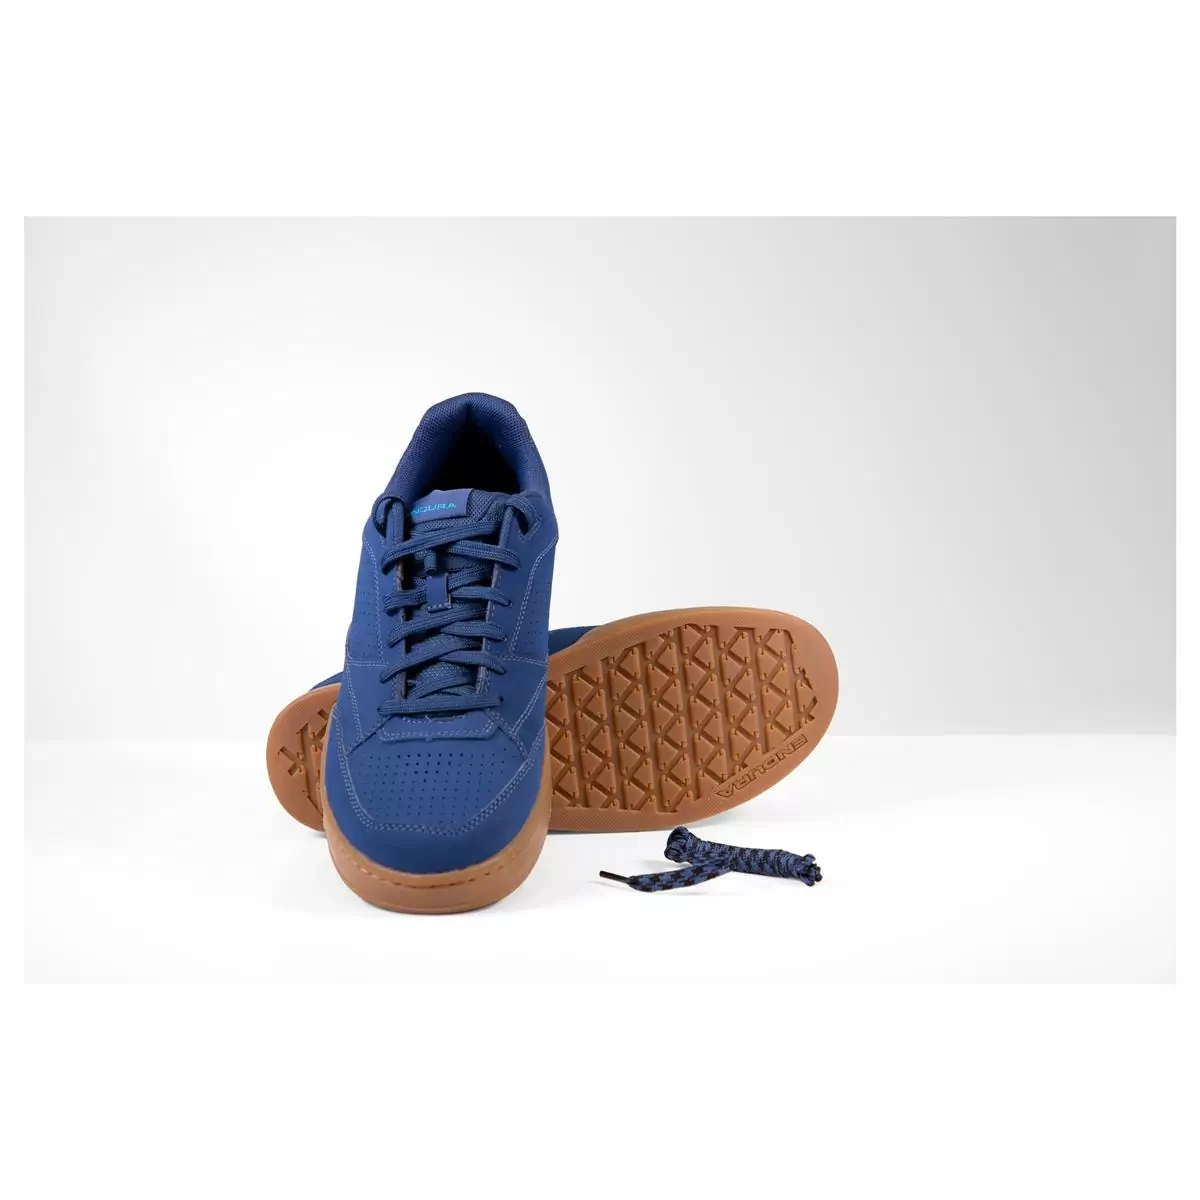 Hummvee Flat Pedal Shoes Blue Size 39 #3